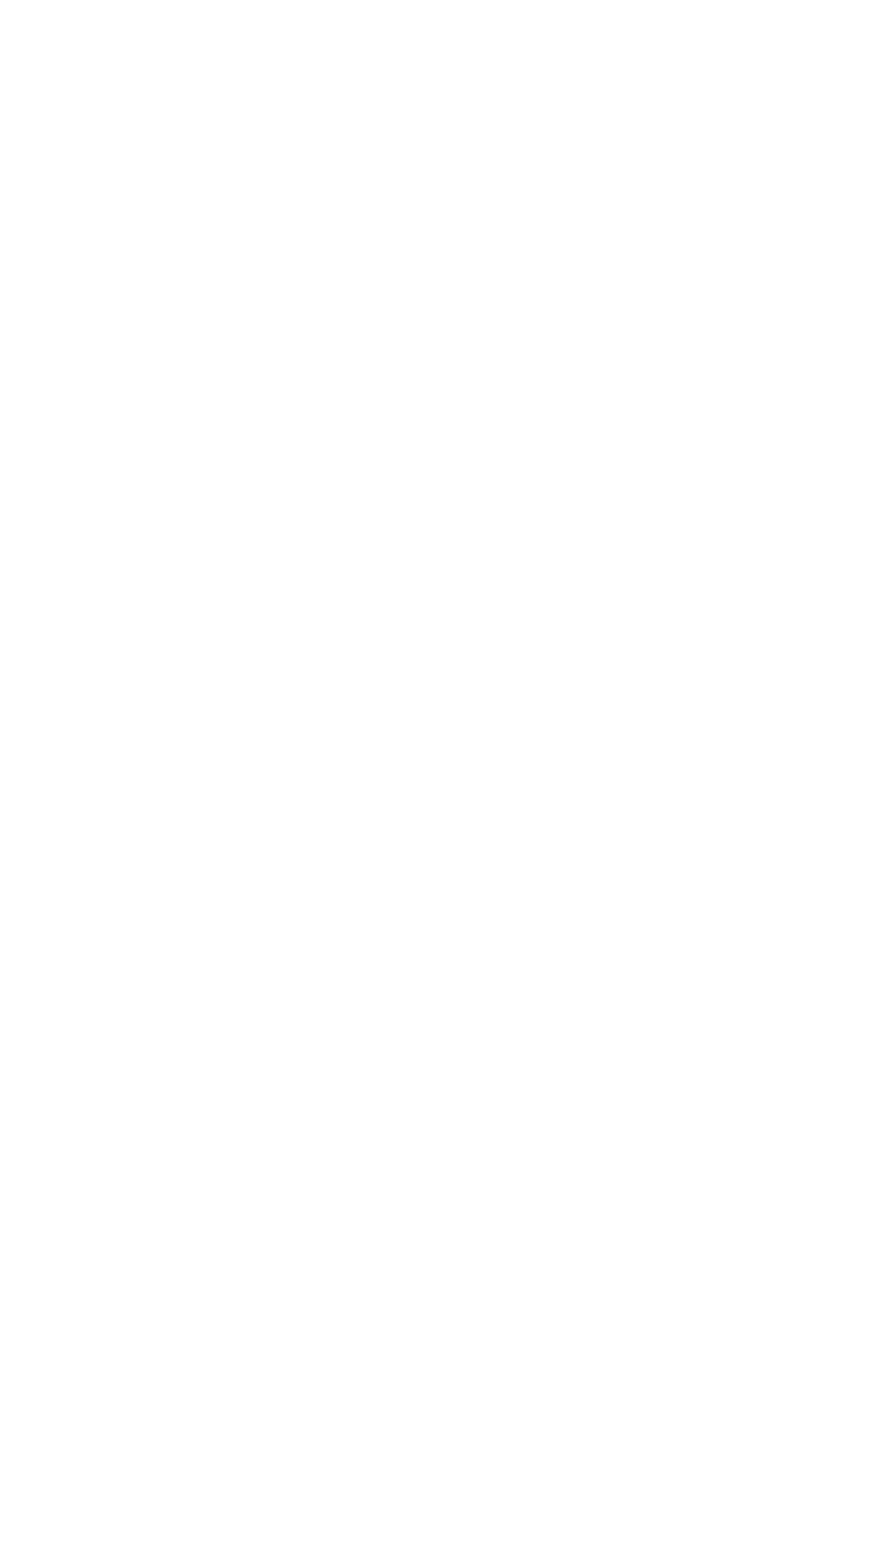 RLJ Lodging Trust Logo für dunkle Hintergründe (transparentes PNG)